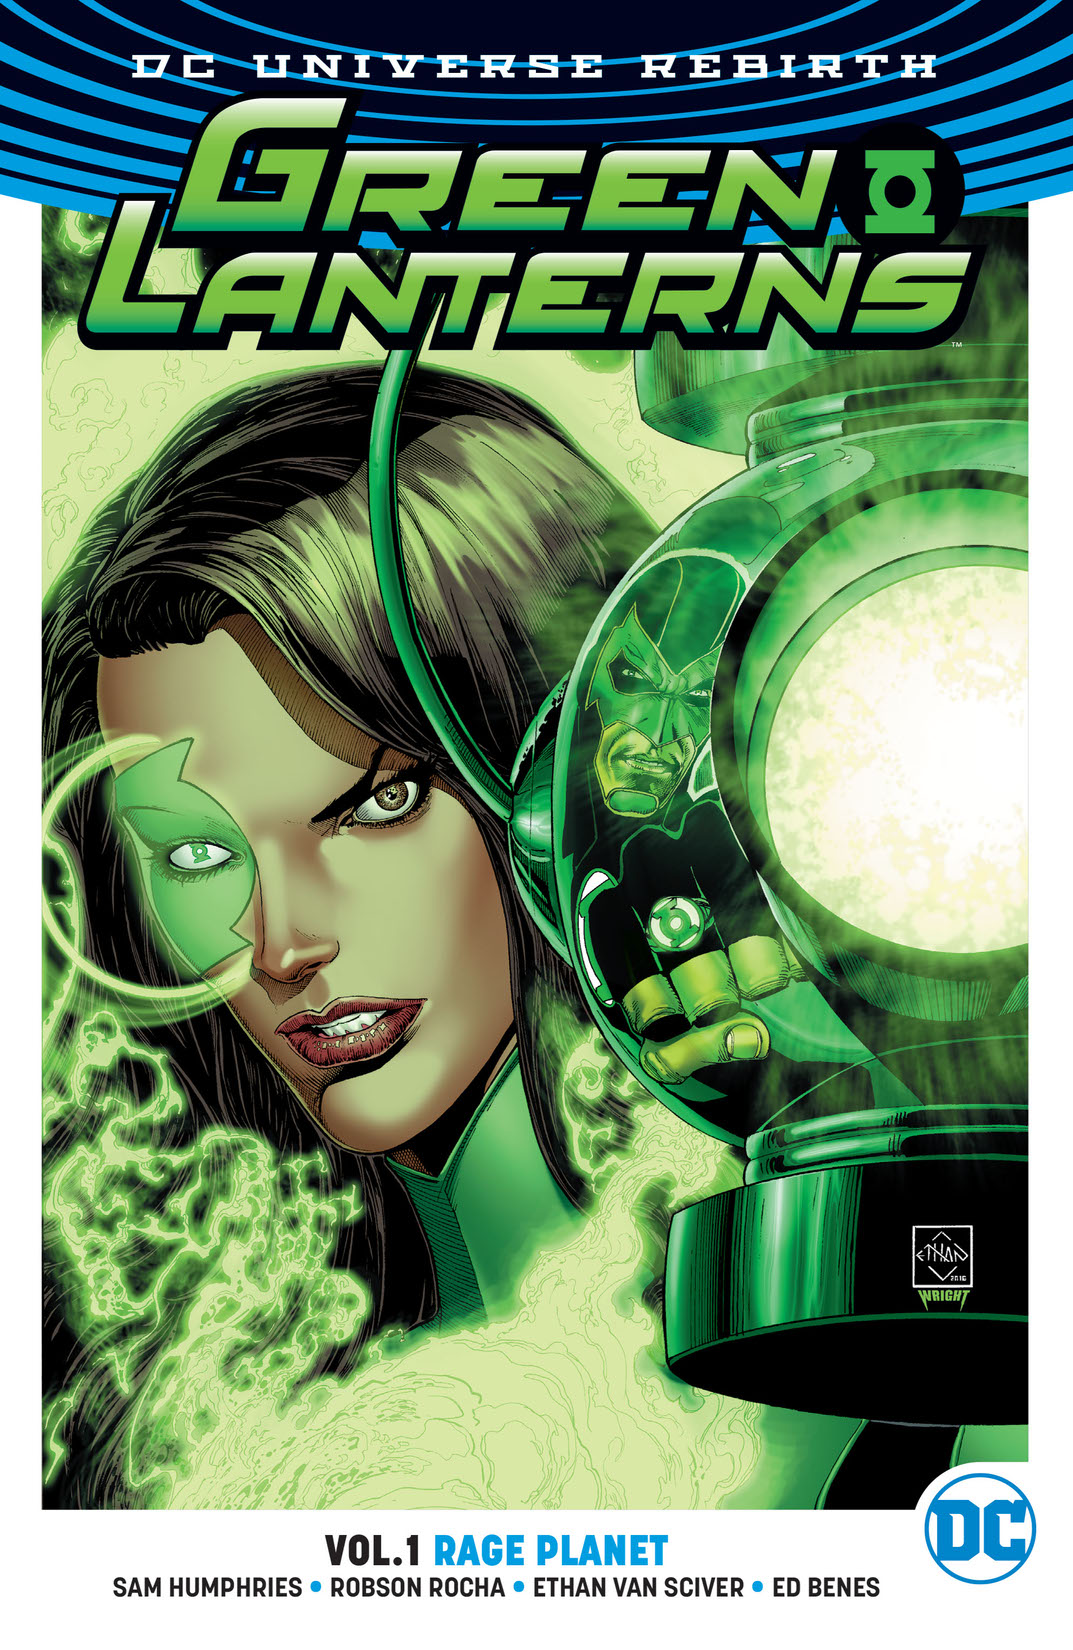 Green Lanterns Vol. 1: Rage Planet preview images